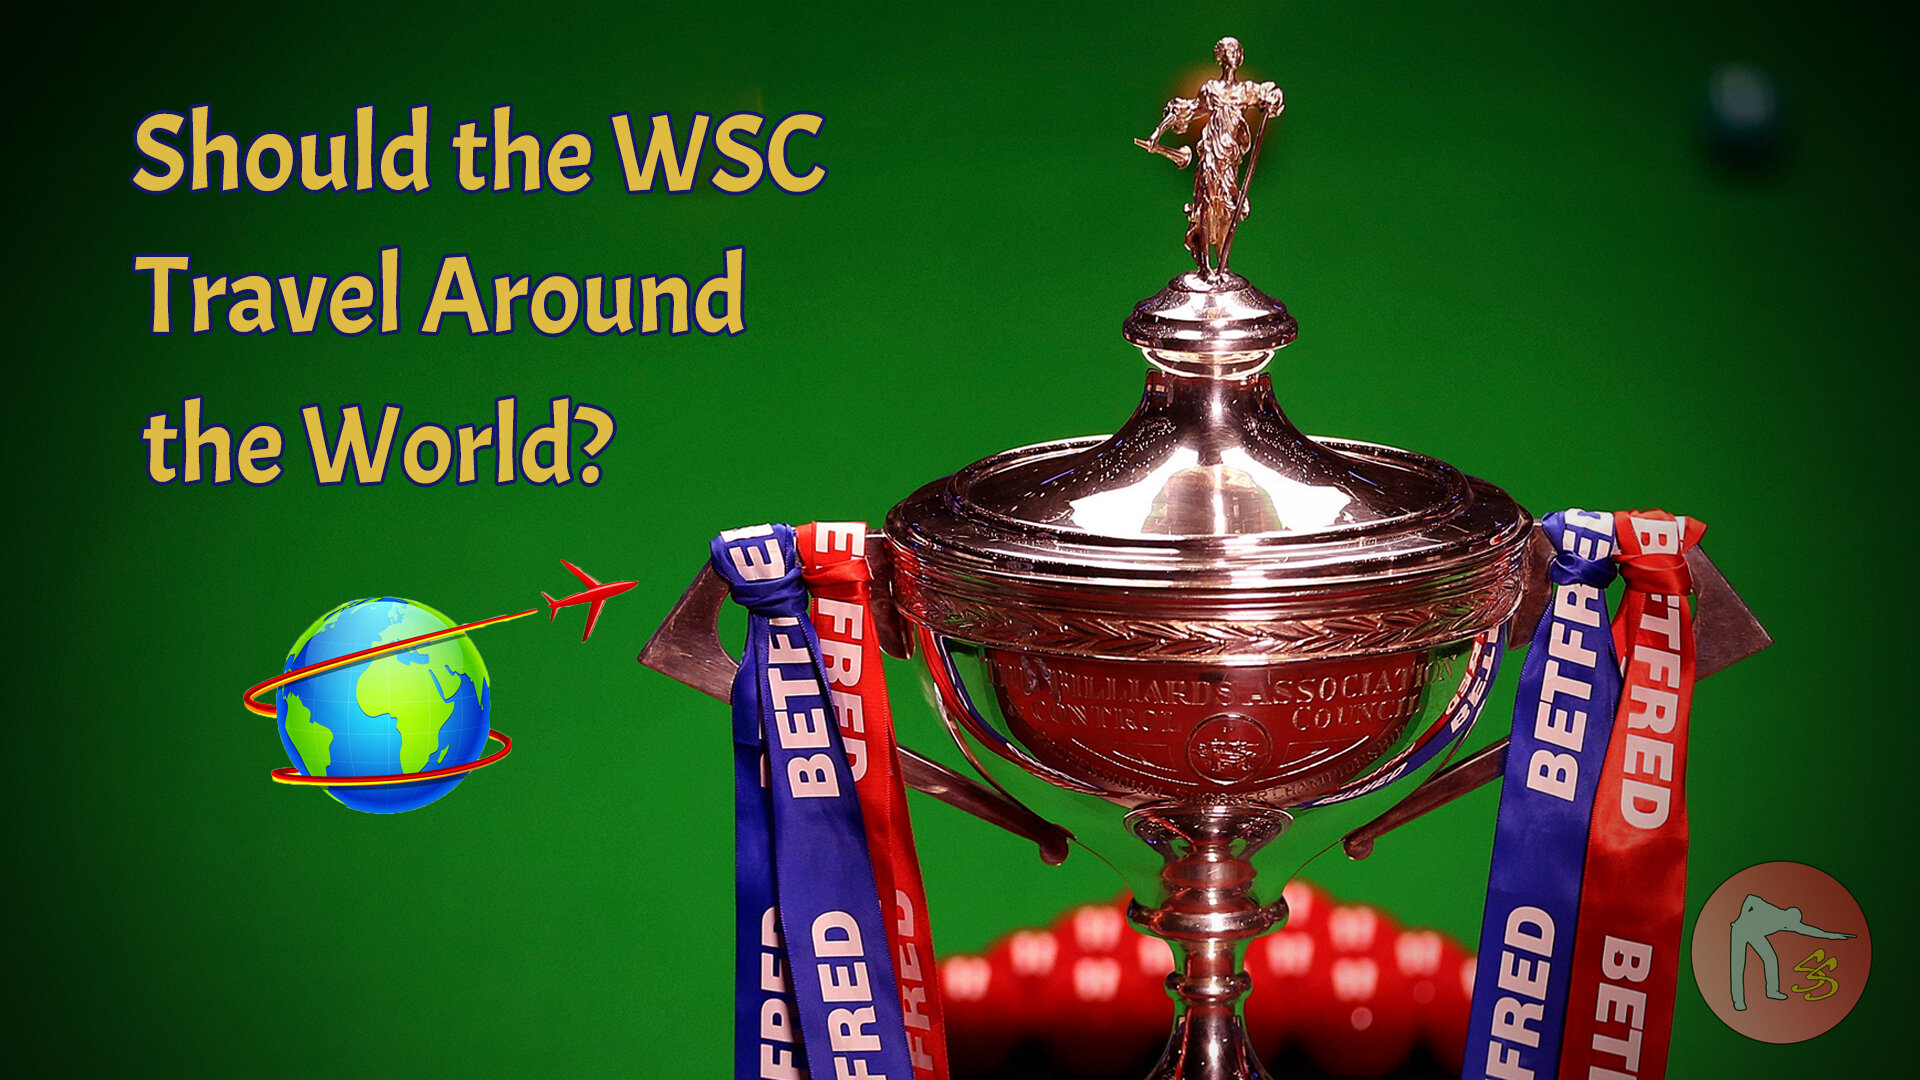 World Snooker Championship in Sheffield